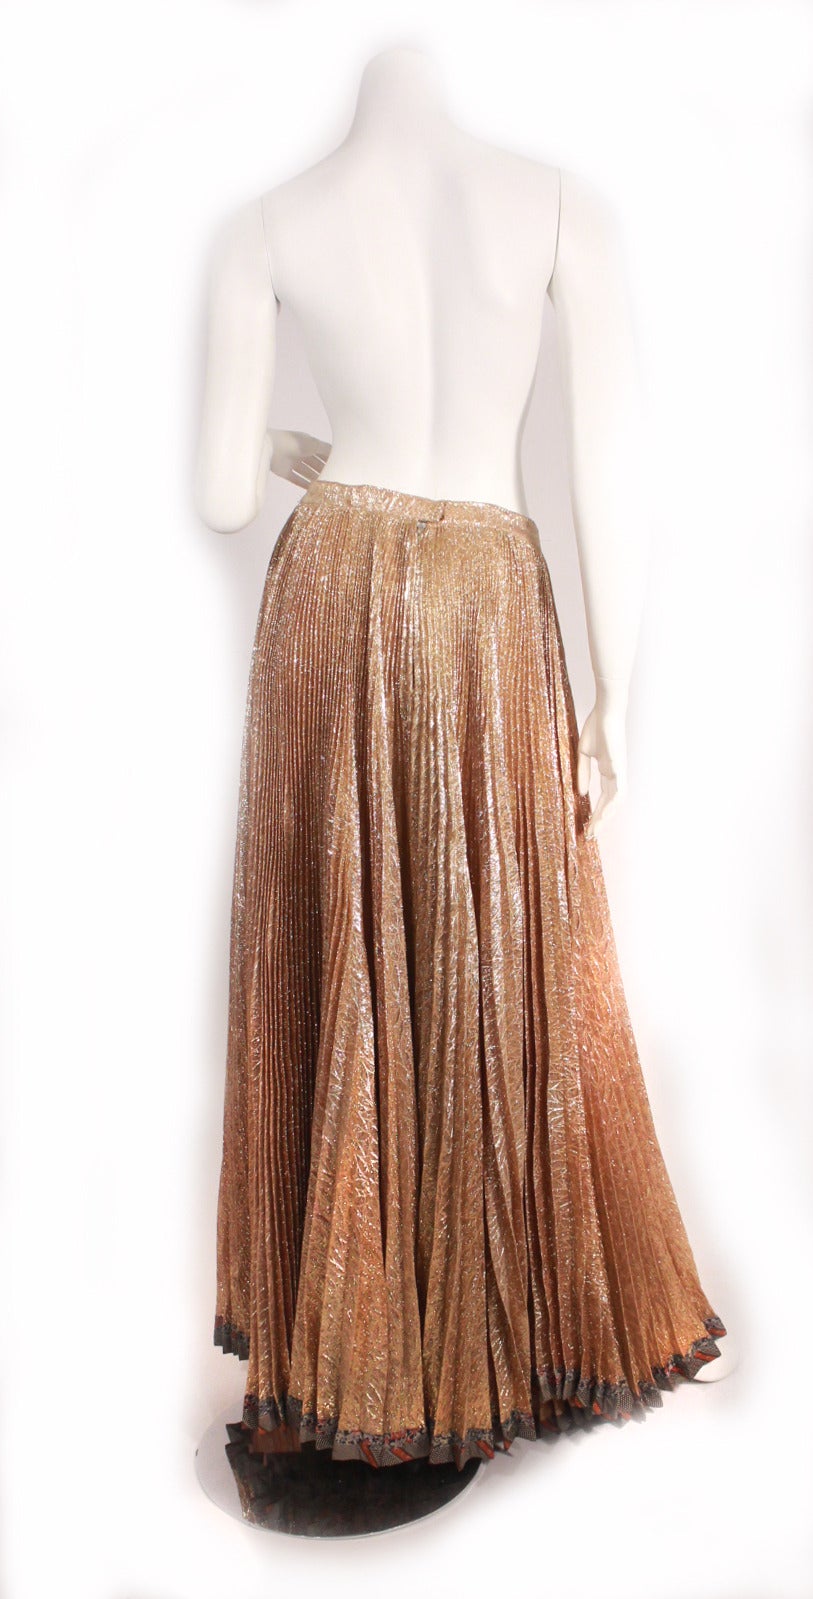 Koos Van Den Akker Gold Lame Skirt In Excellent Condition For Sale In New York, NY